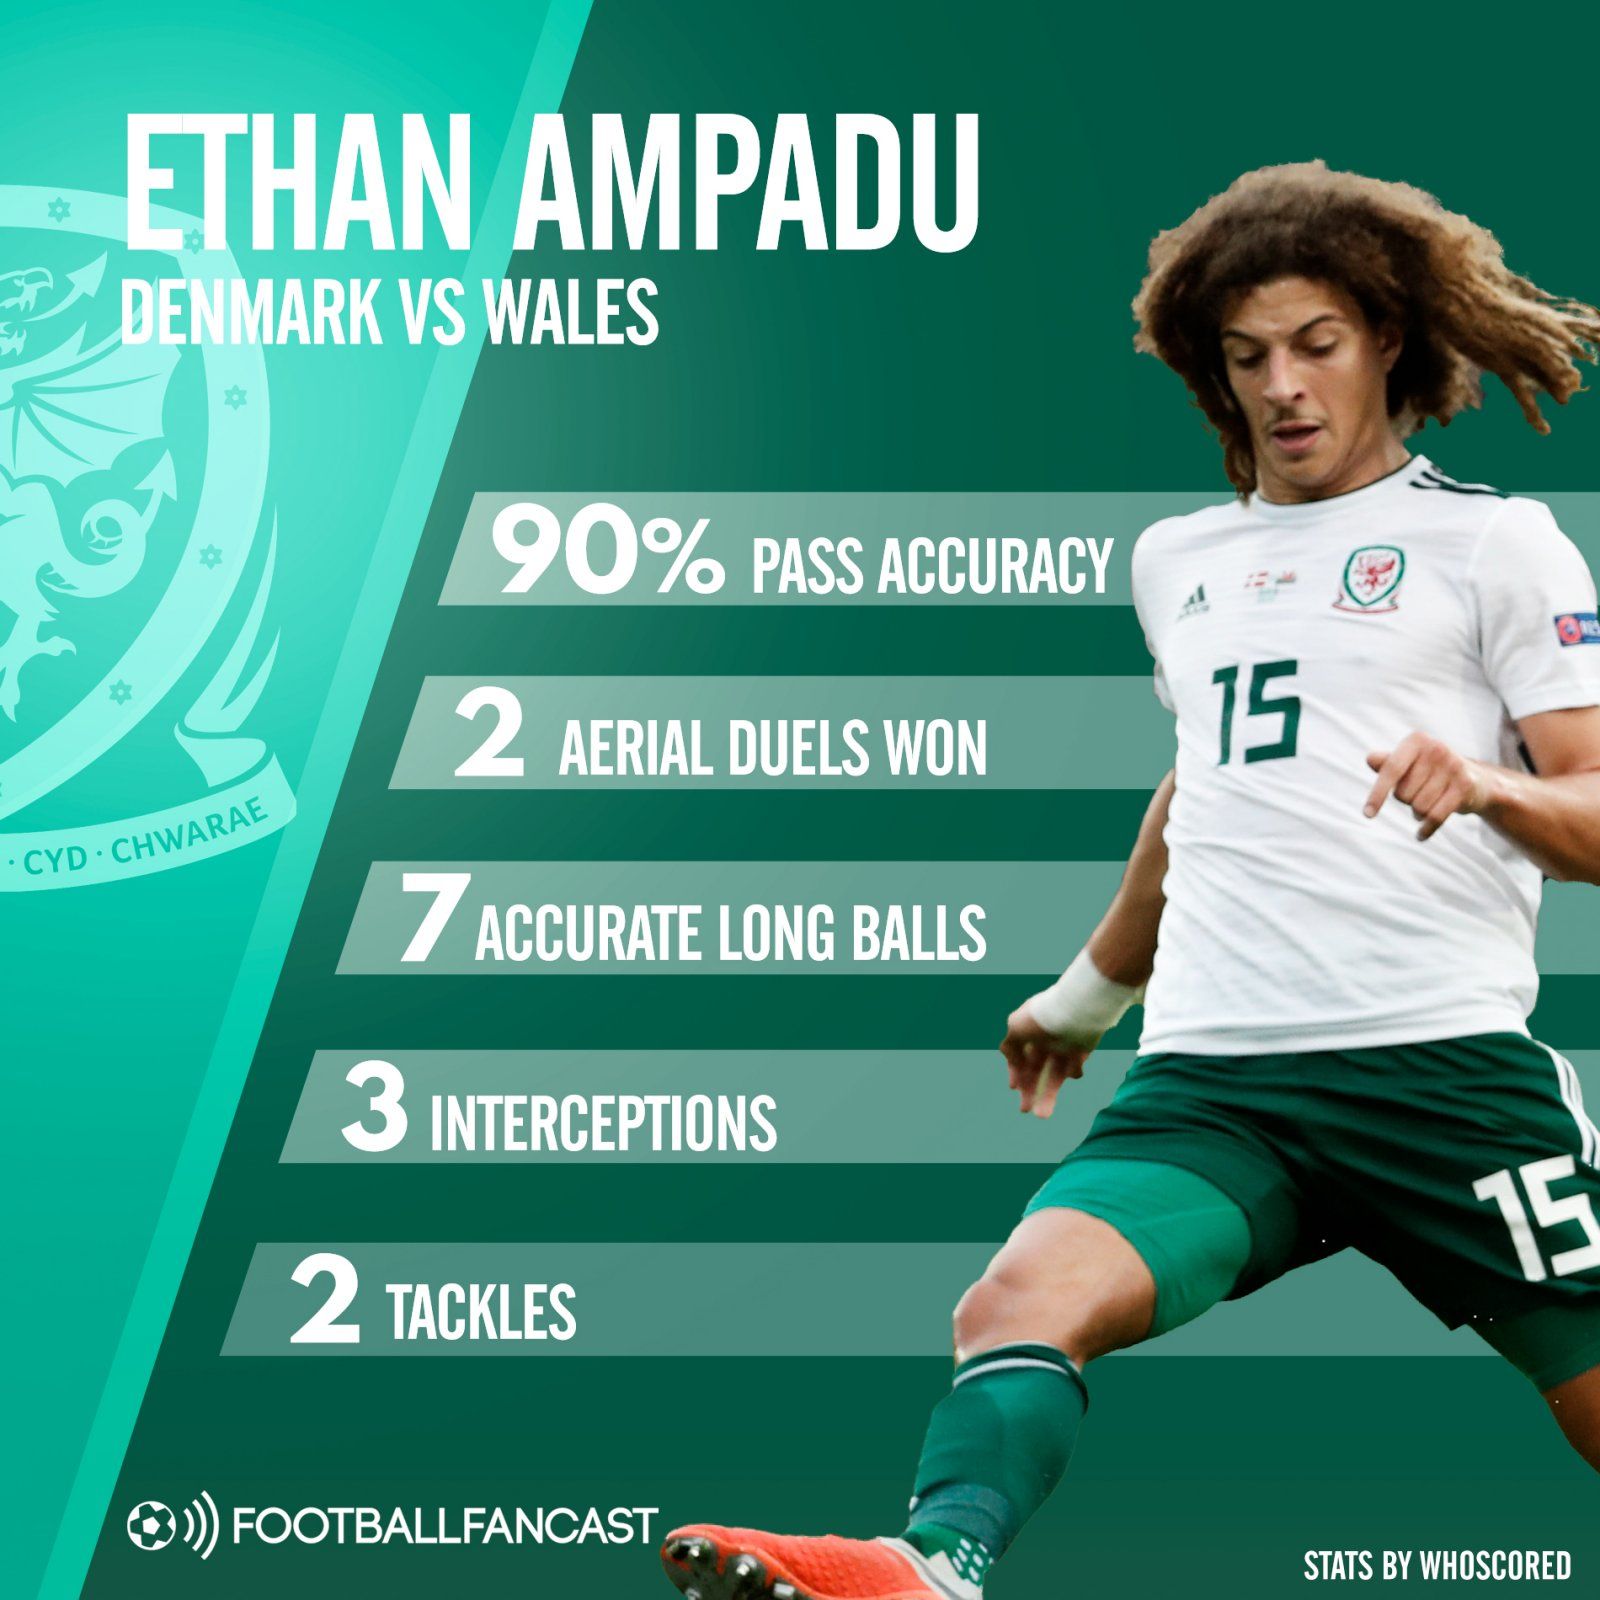 Chelsea starlet Ethan Ampadu's stats for Wales vs Denmark